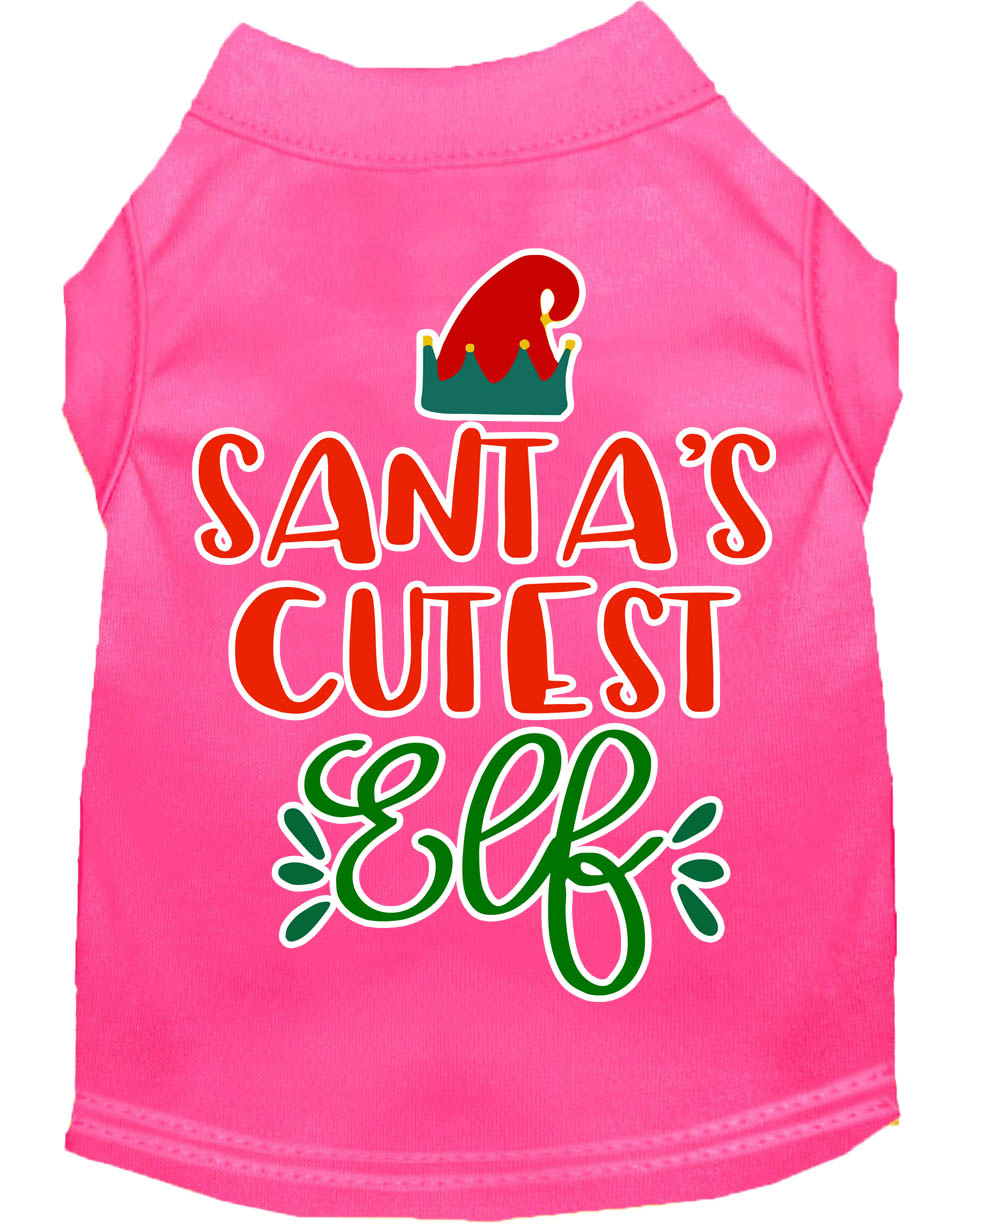 Santa's Cutest Elf Screen Print Dog Shirt Bright Pink Med